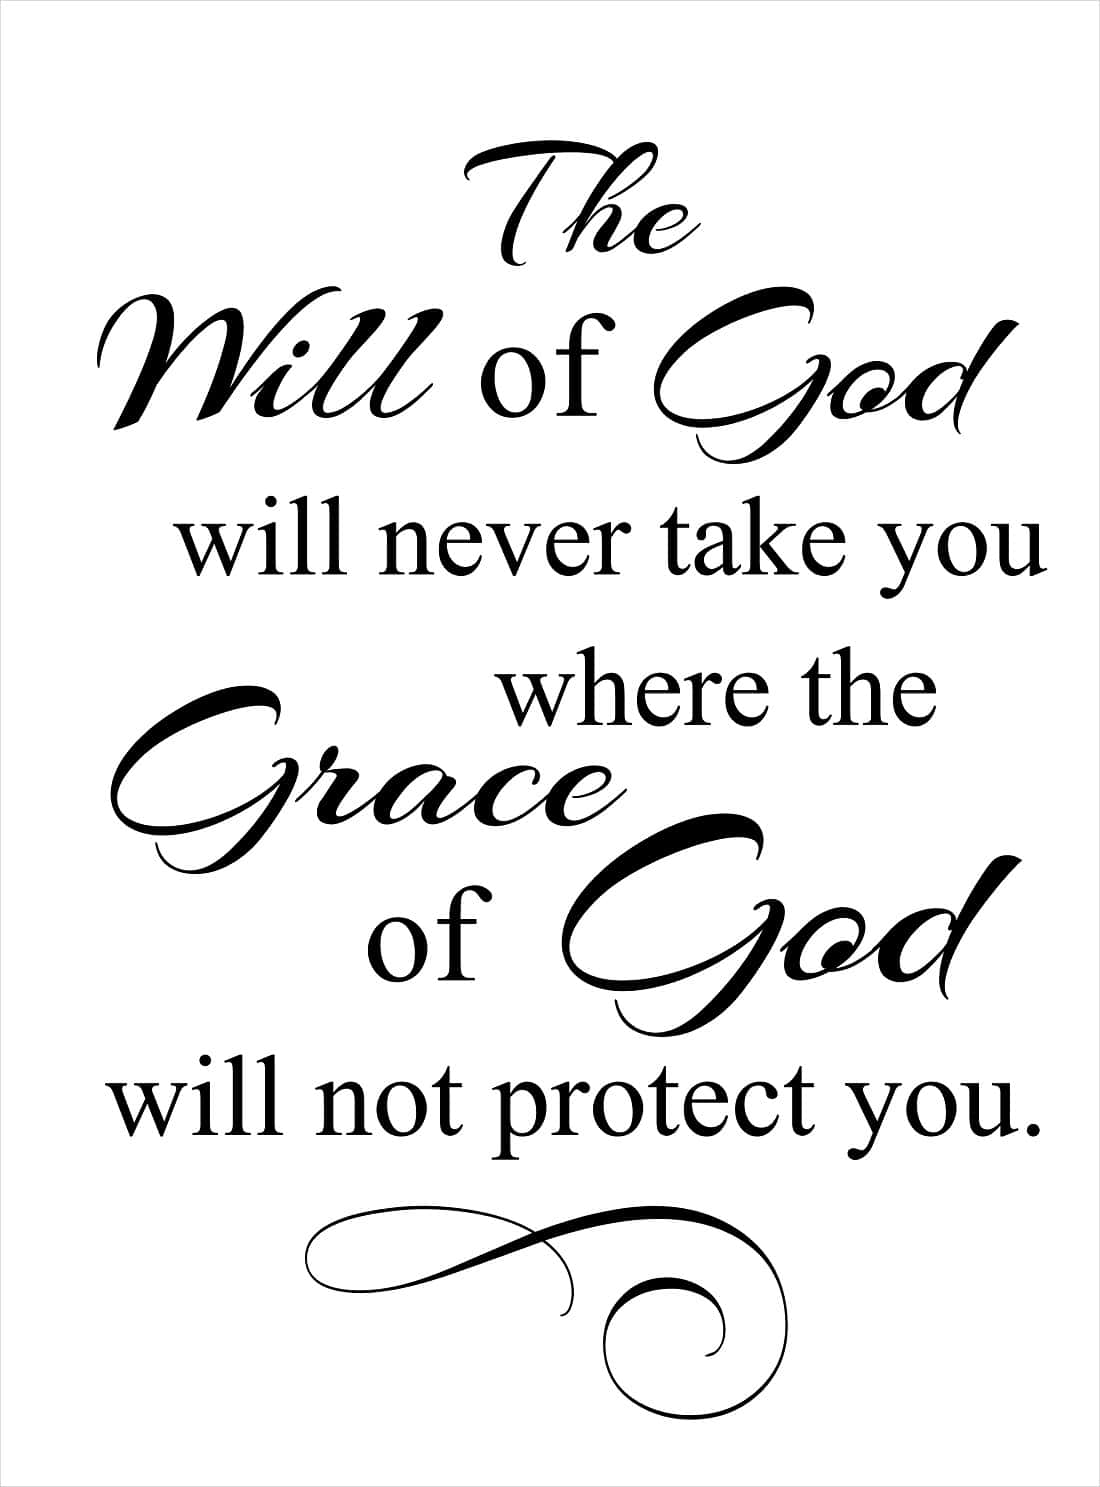 Willand Graceof God Quote Wallpaper